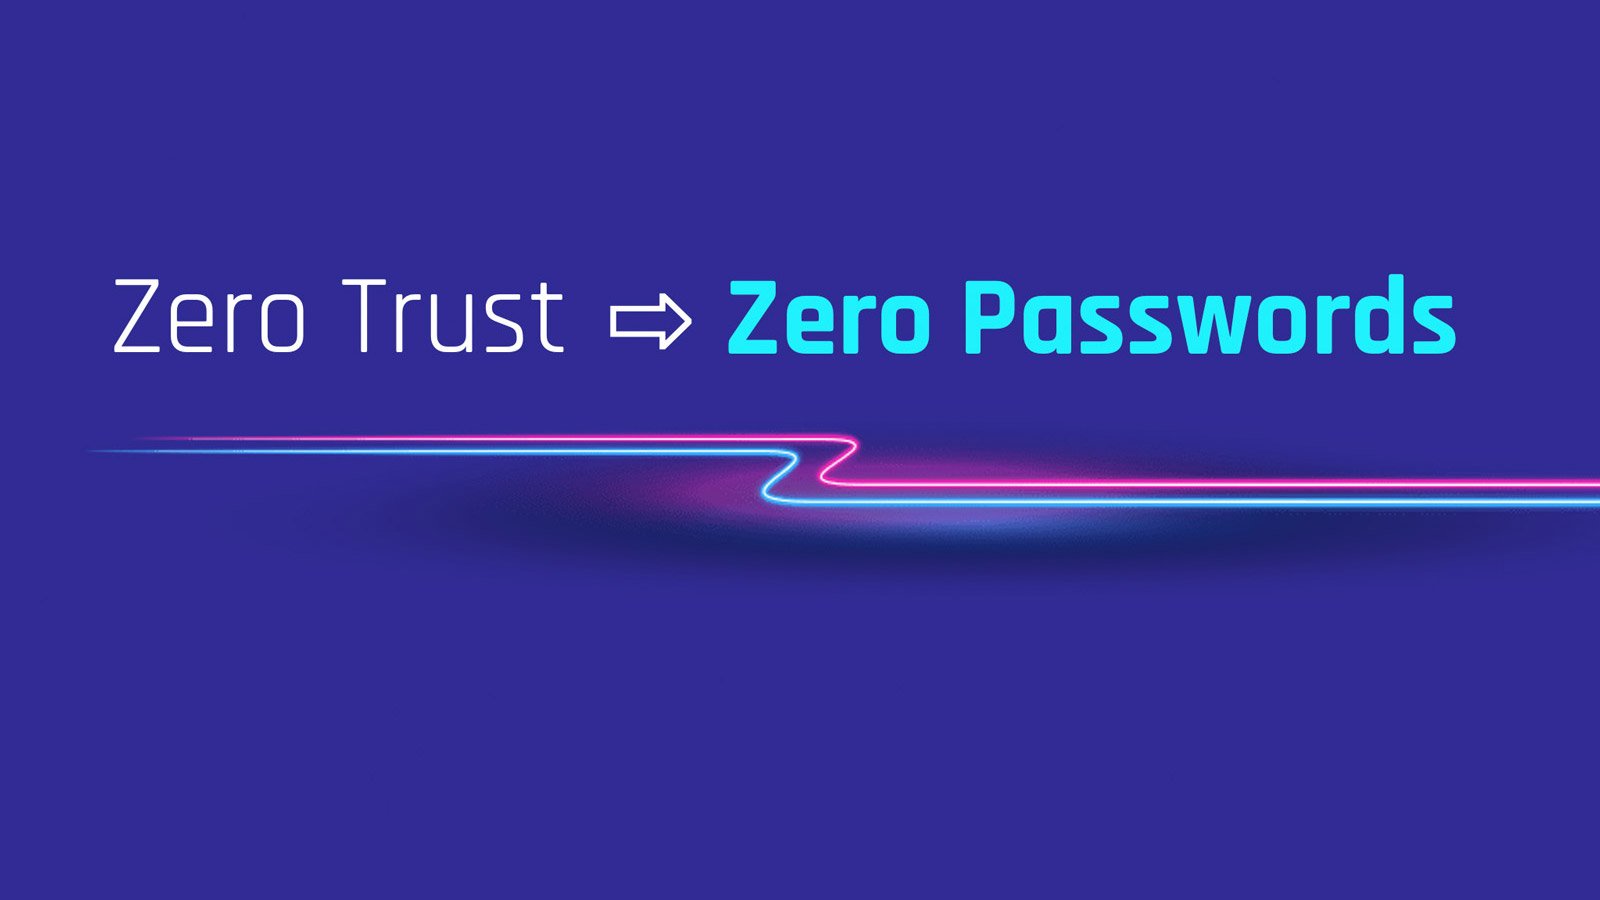 The Passwordless Approach to Zero Trust